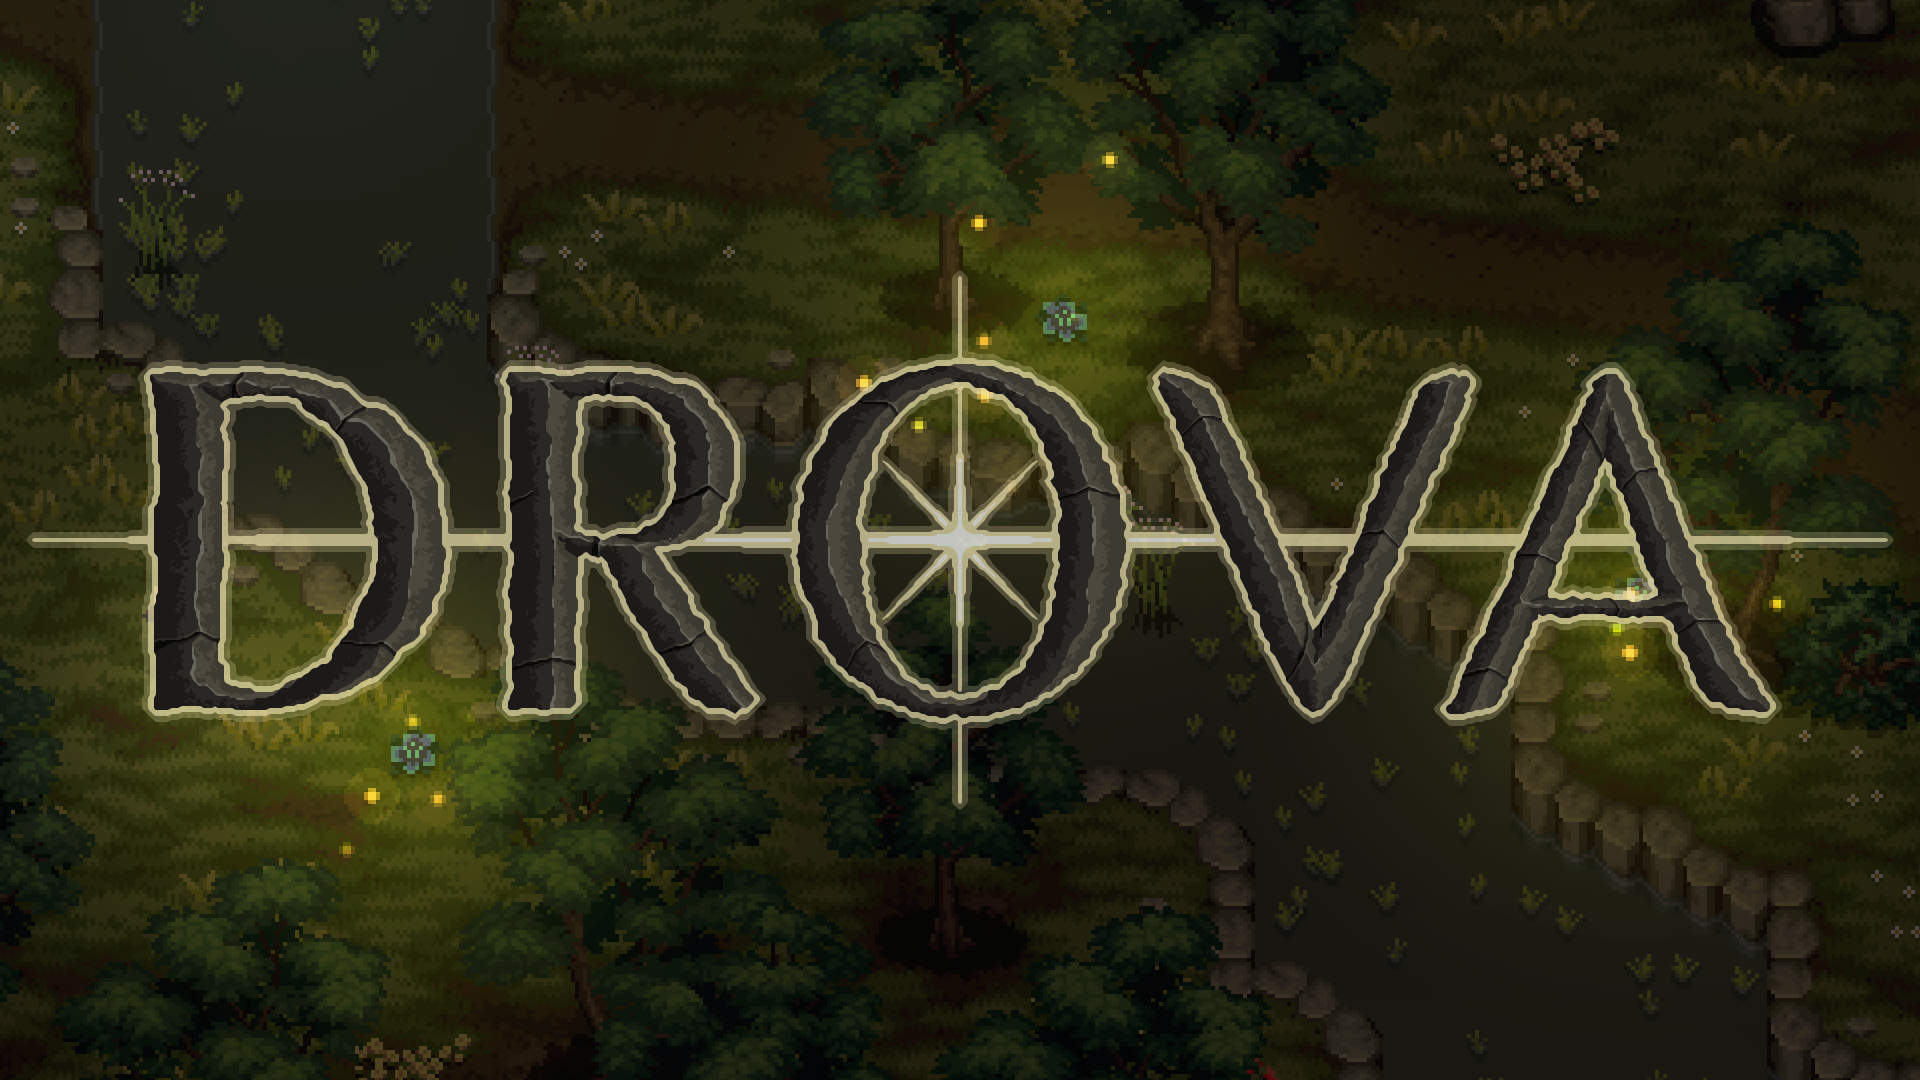 Drova-Forsaken Kin – Gameplay-Trailer gibt ersten Einblick ins düstere Pixel Art-RPG